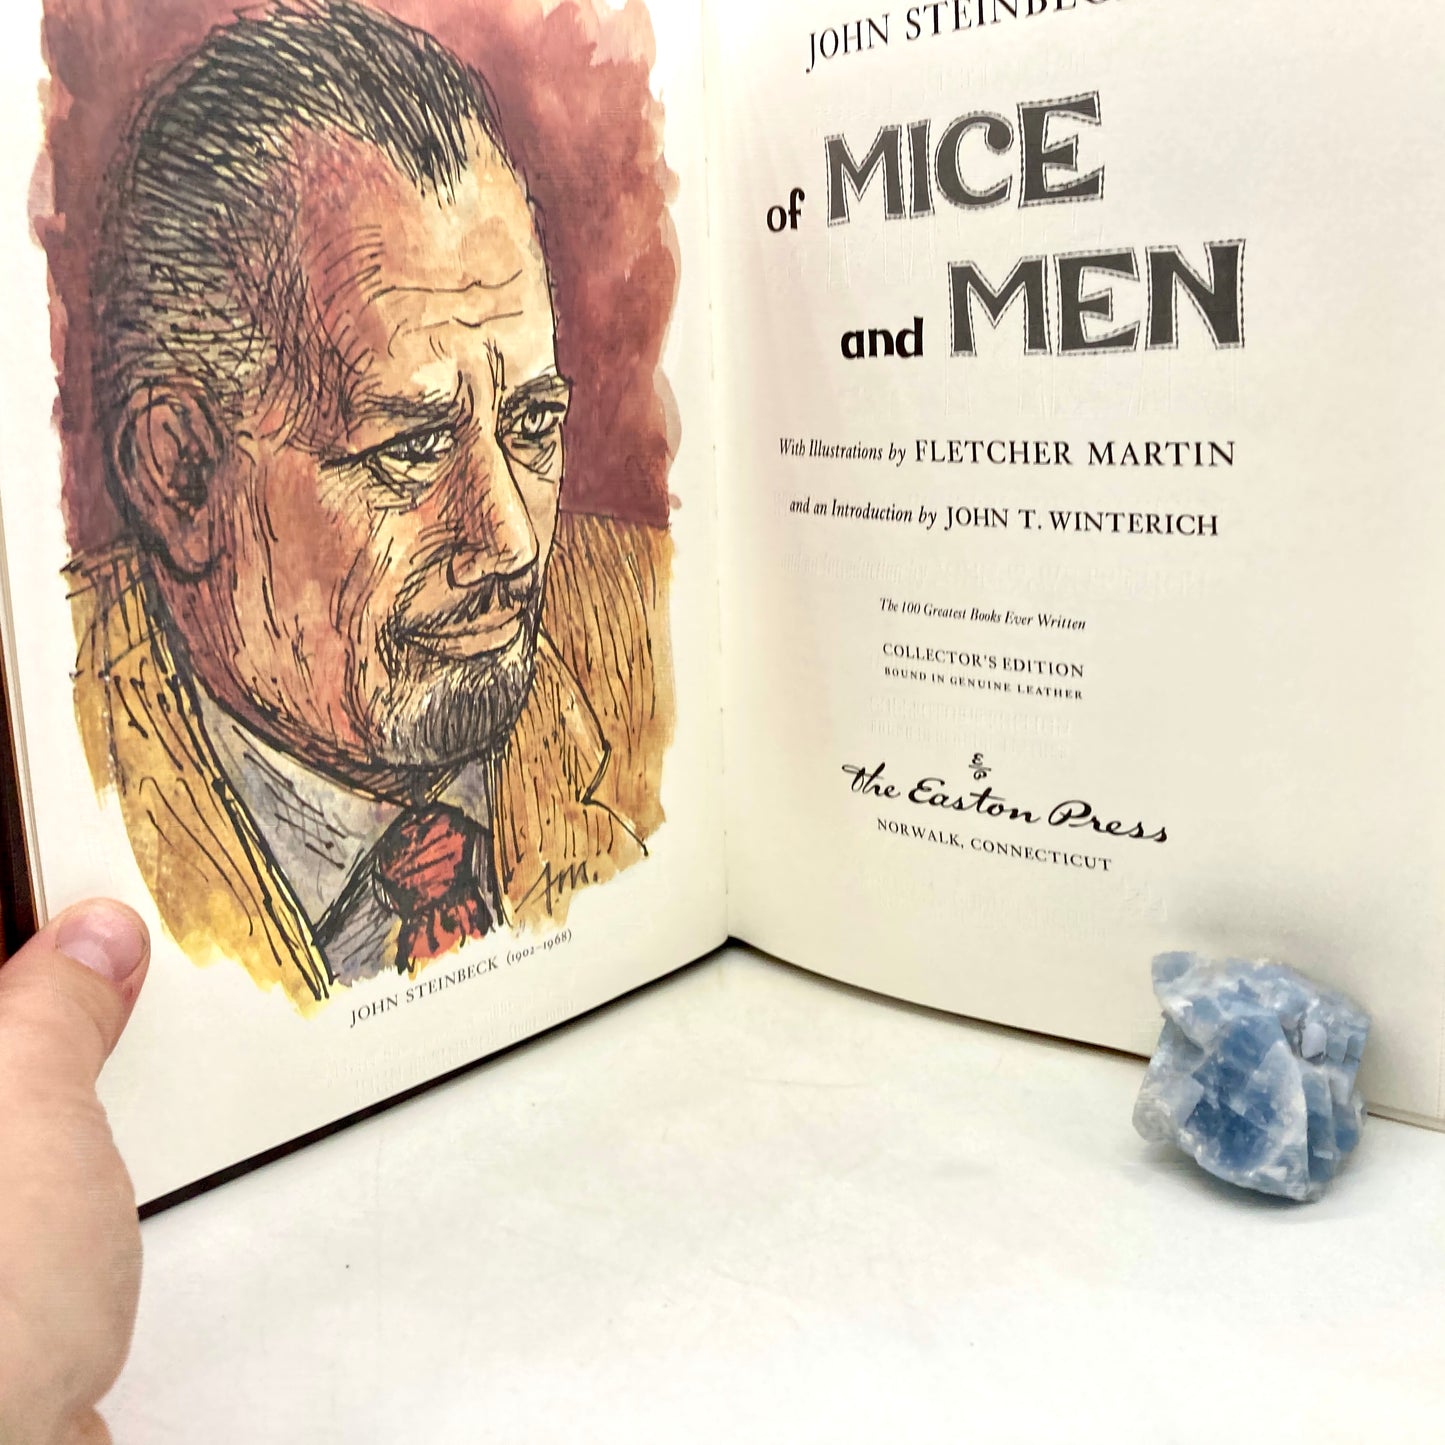 STEINBECK, John "Of Mice and Men" [Easton Press, 1977]